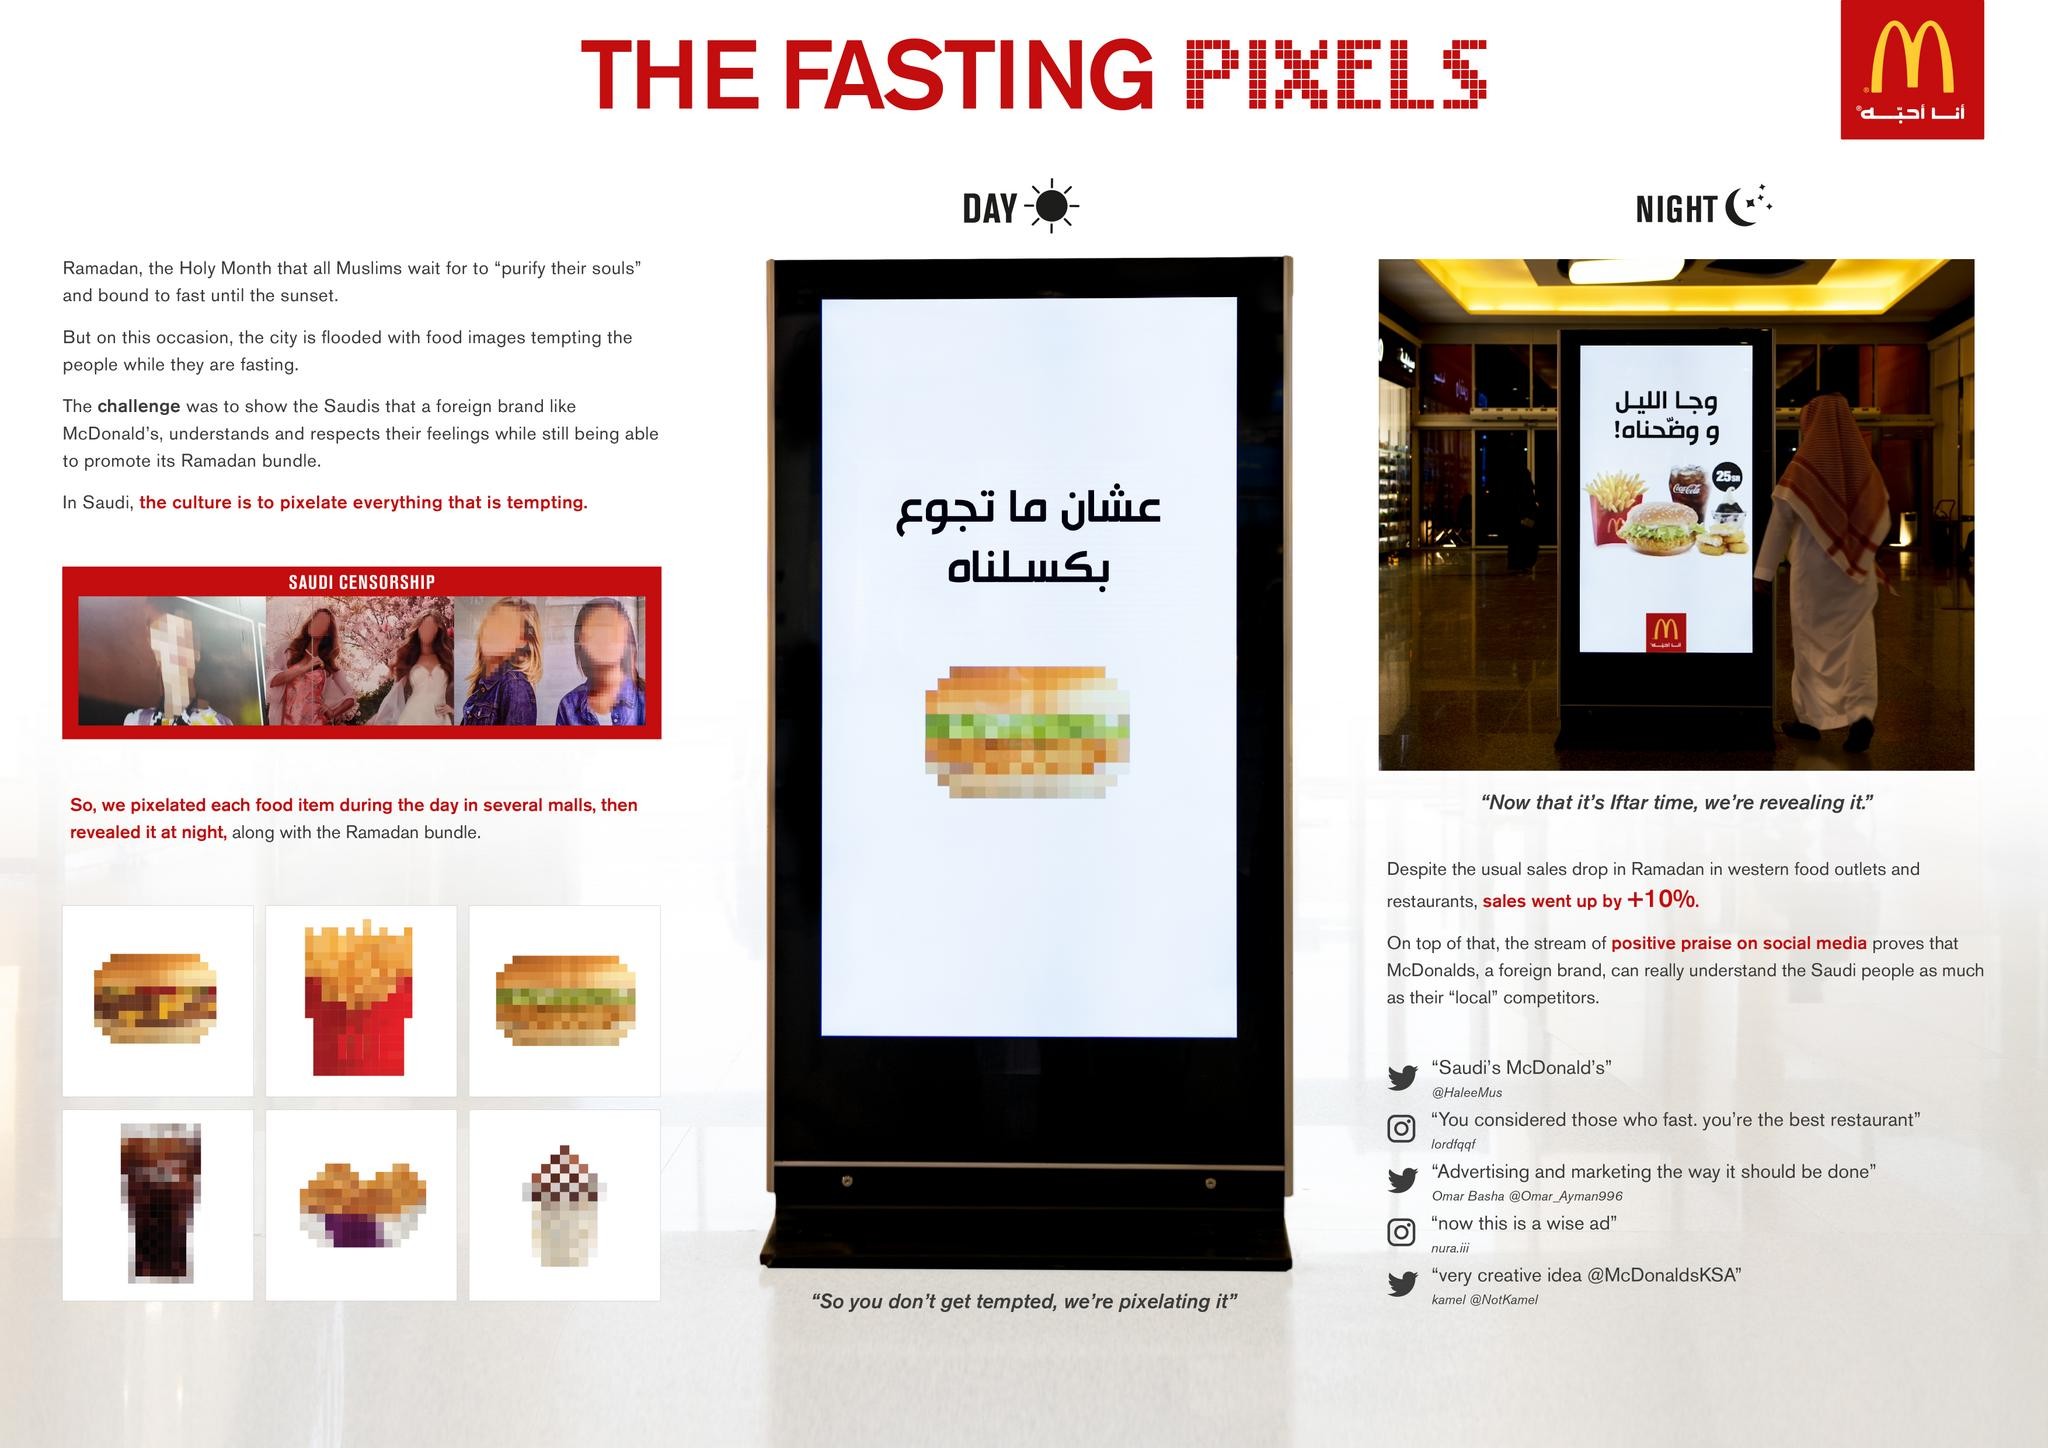 The fasting pixels